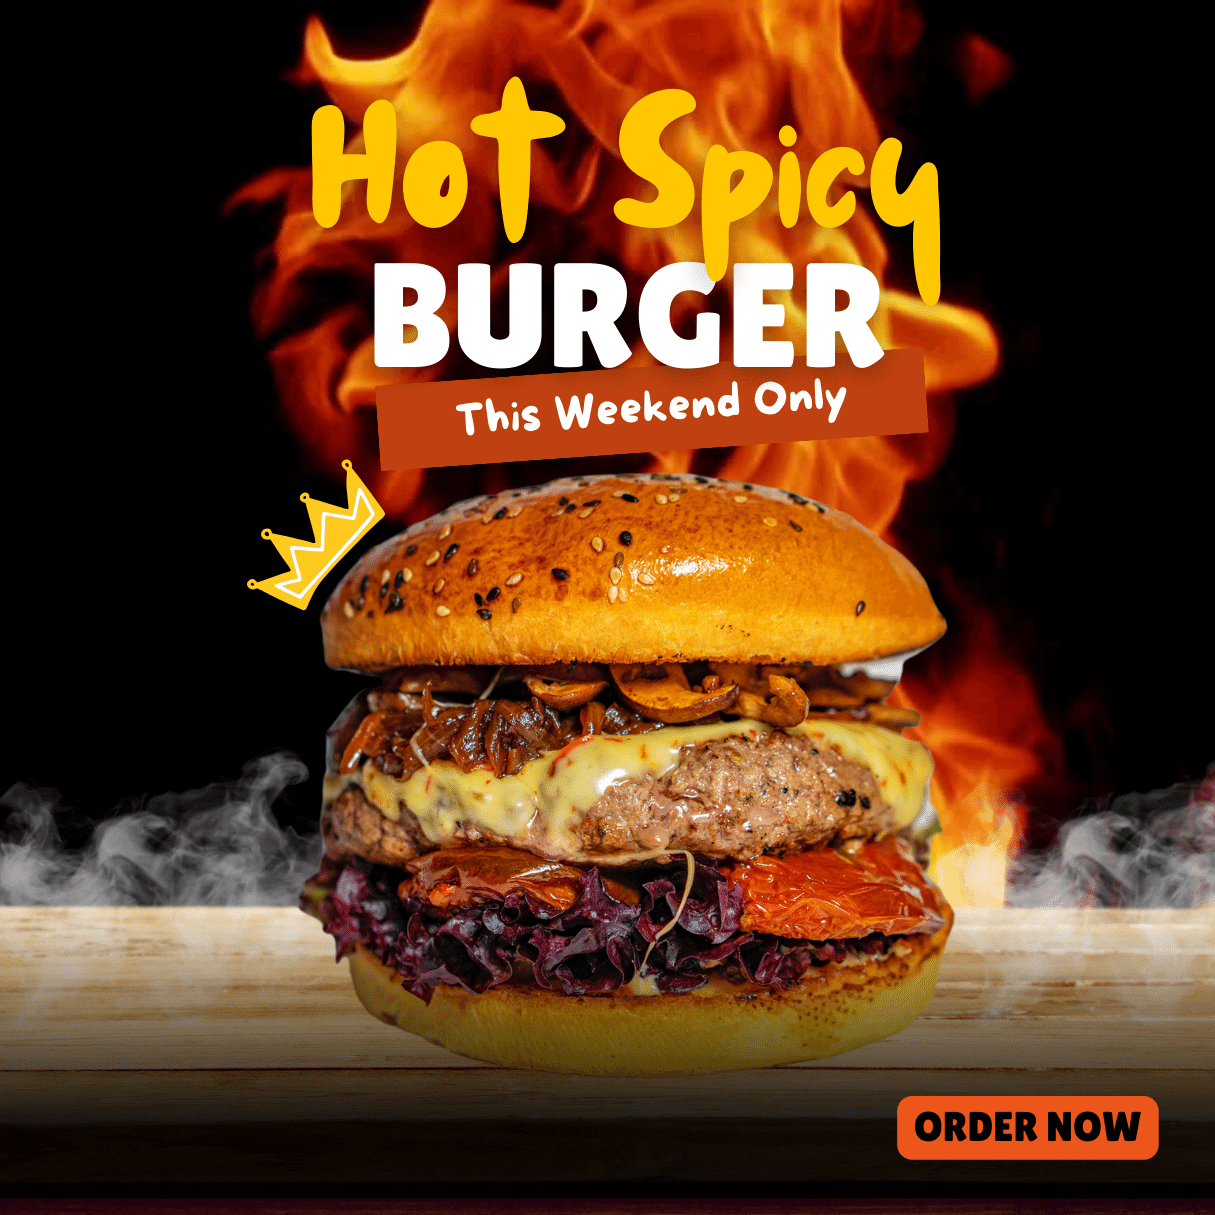 Black Modern Hot Burger preview image.